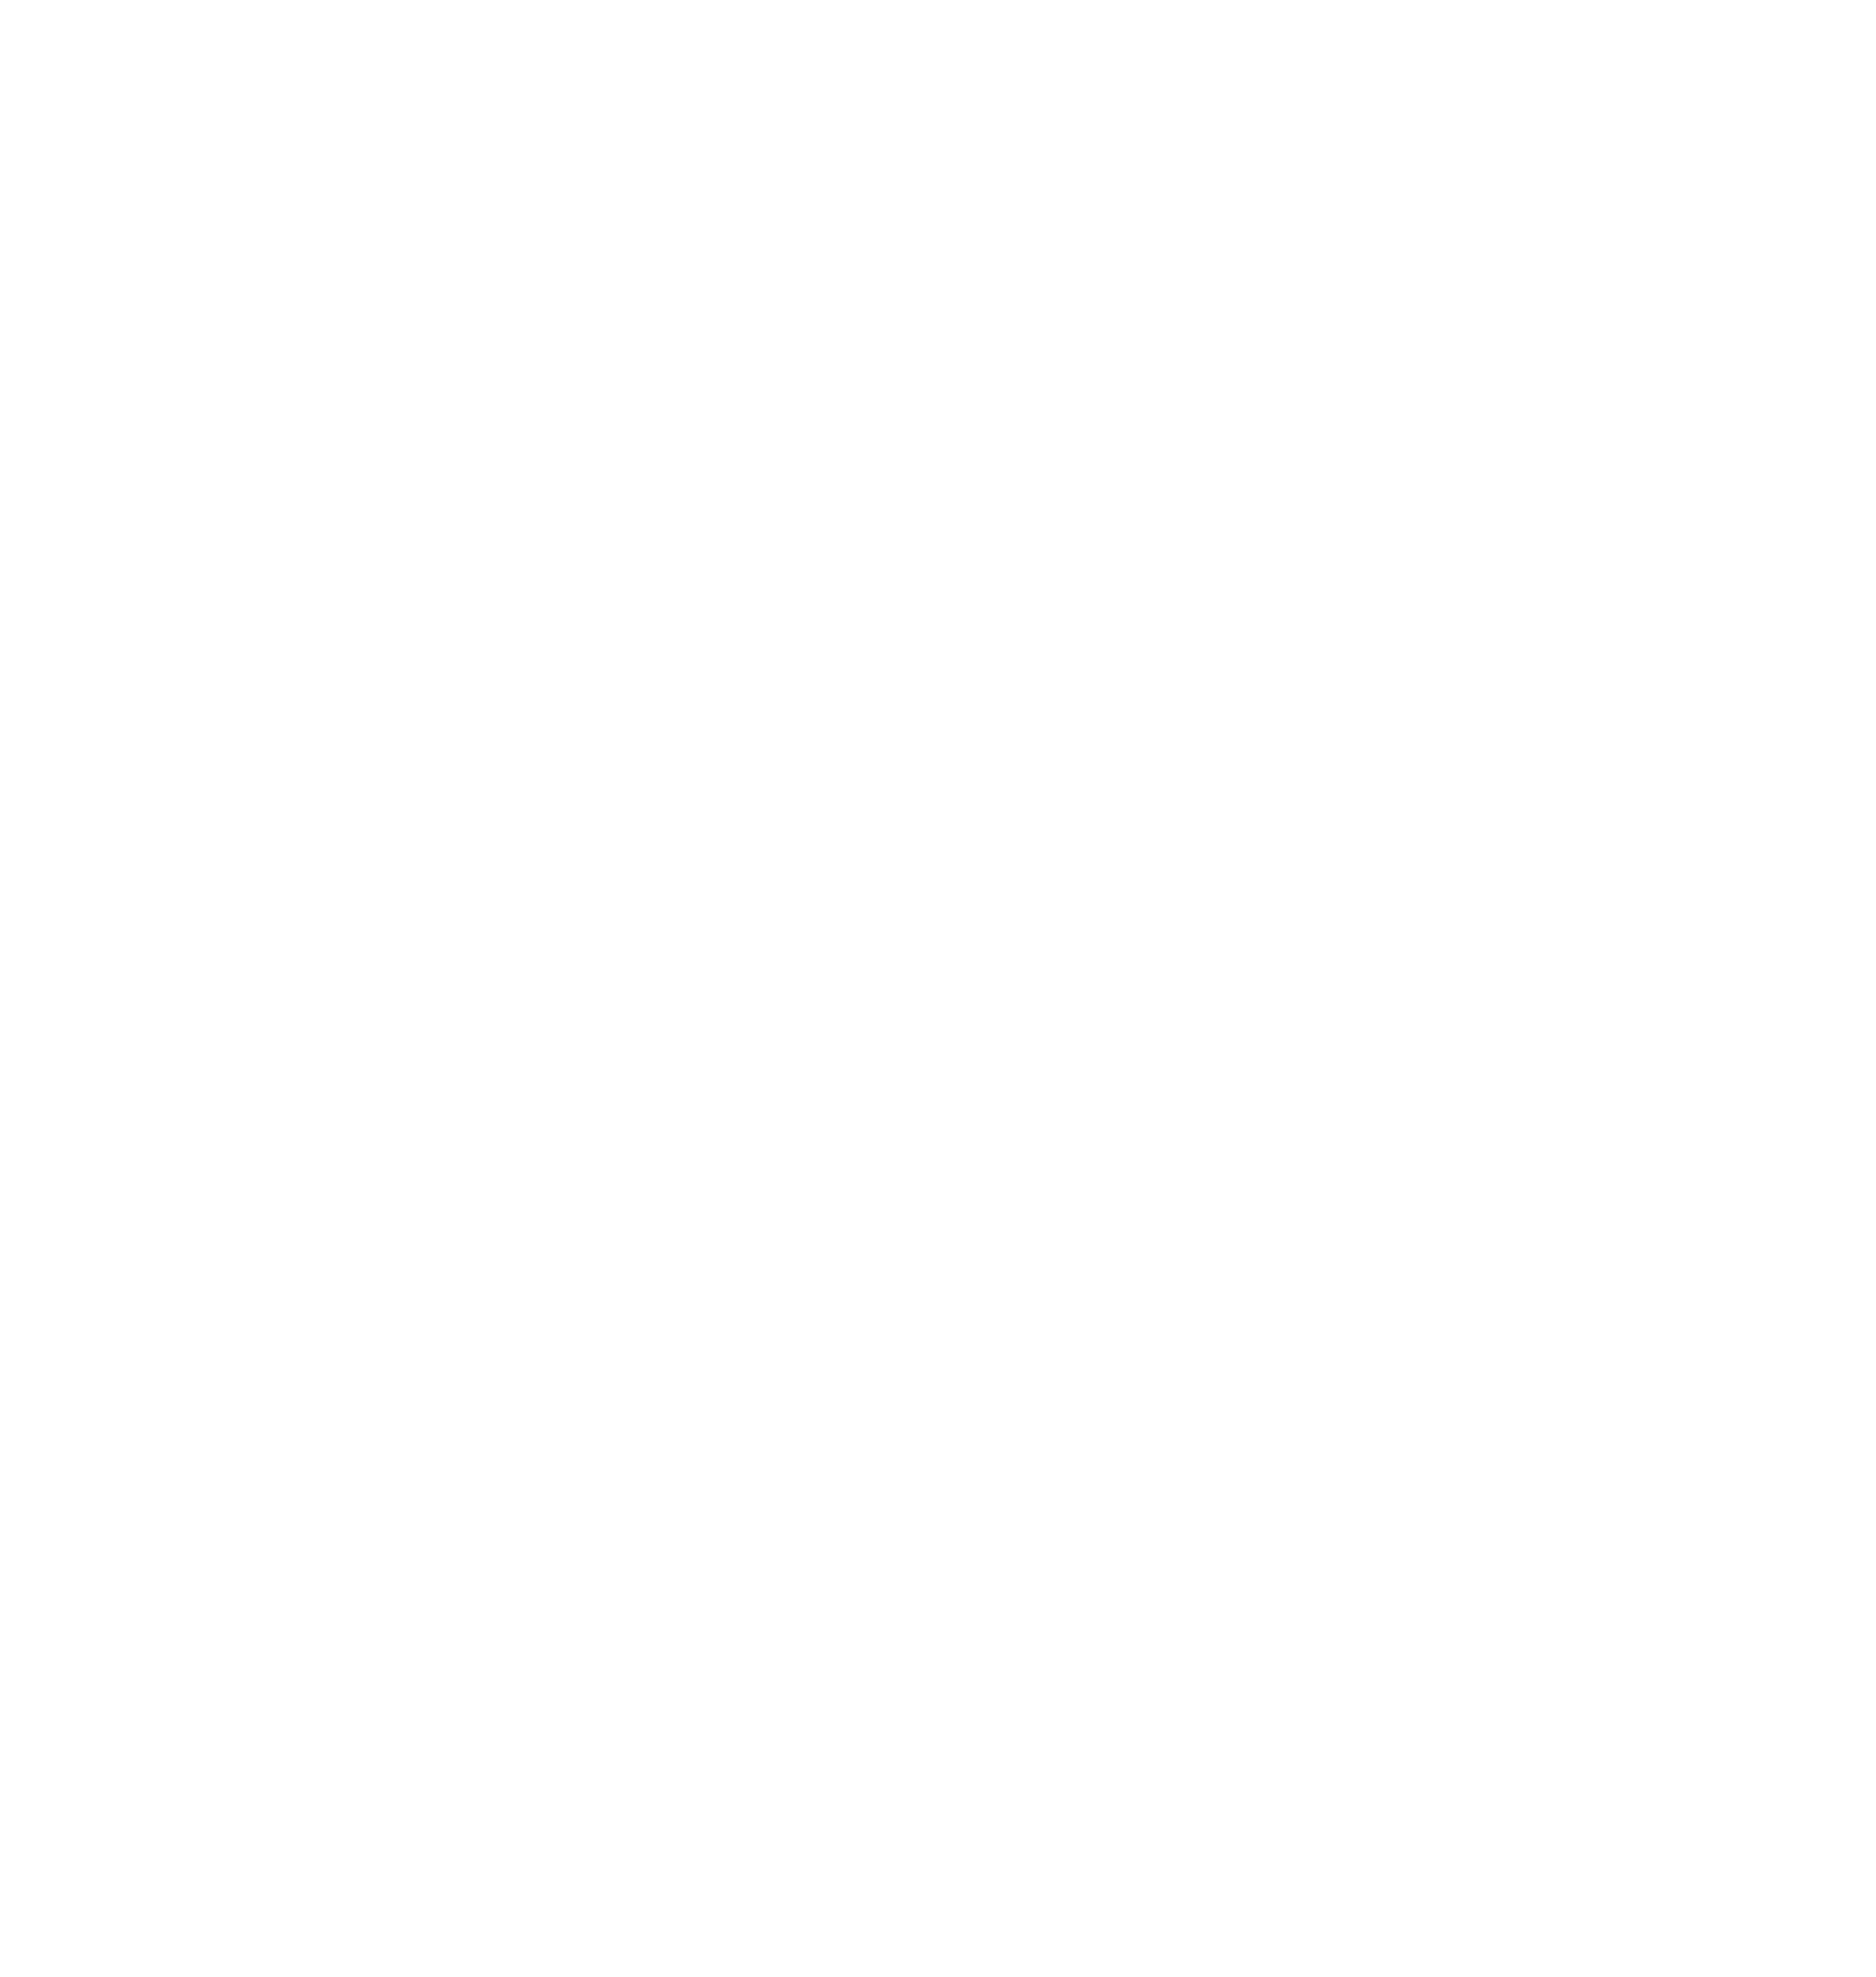 inspira logo white | Inspira builders